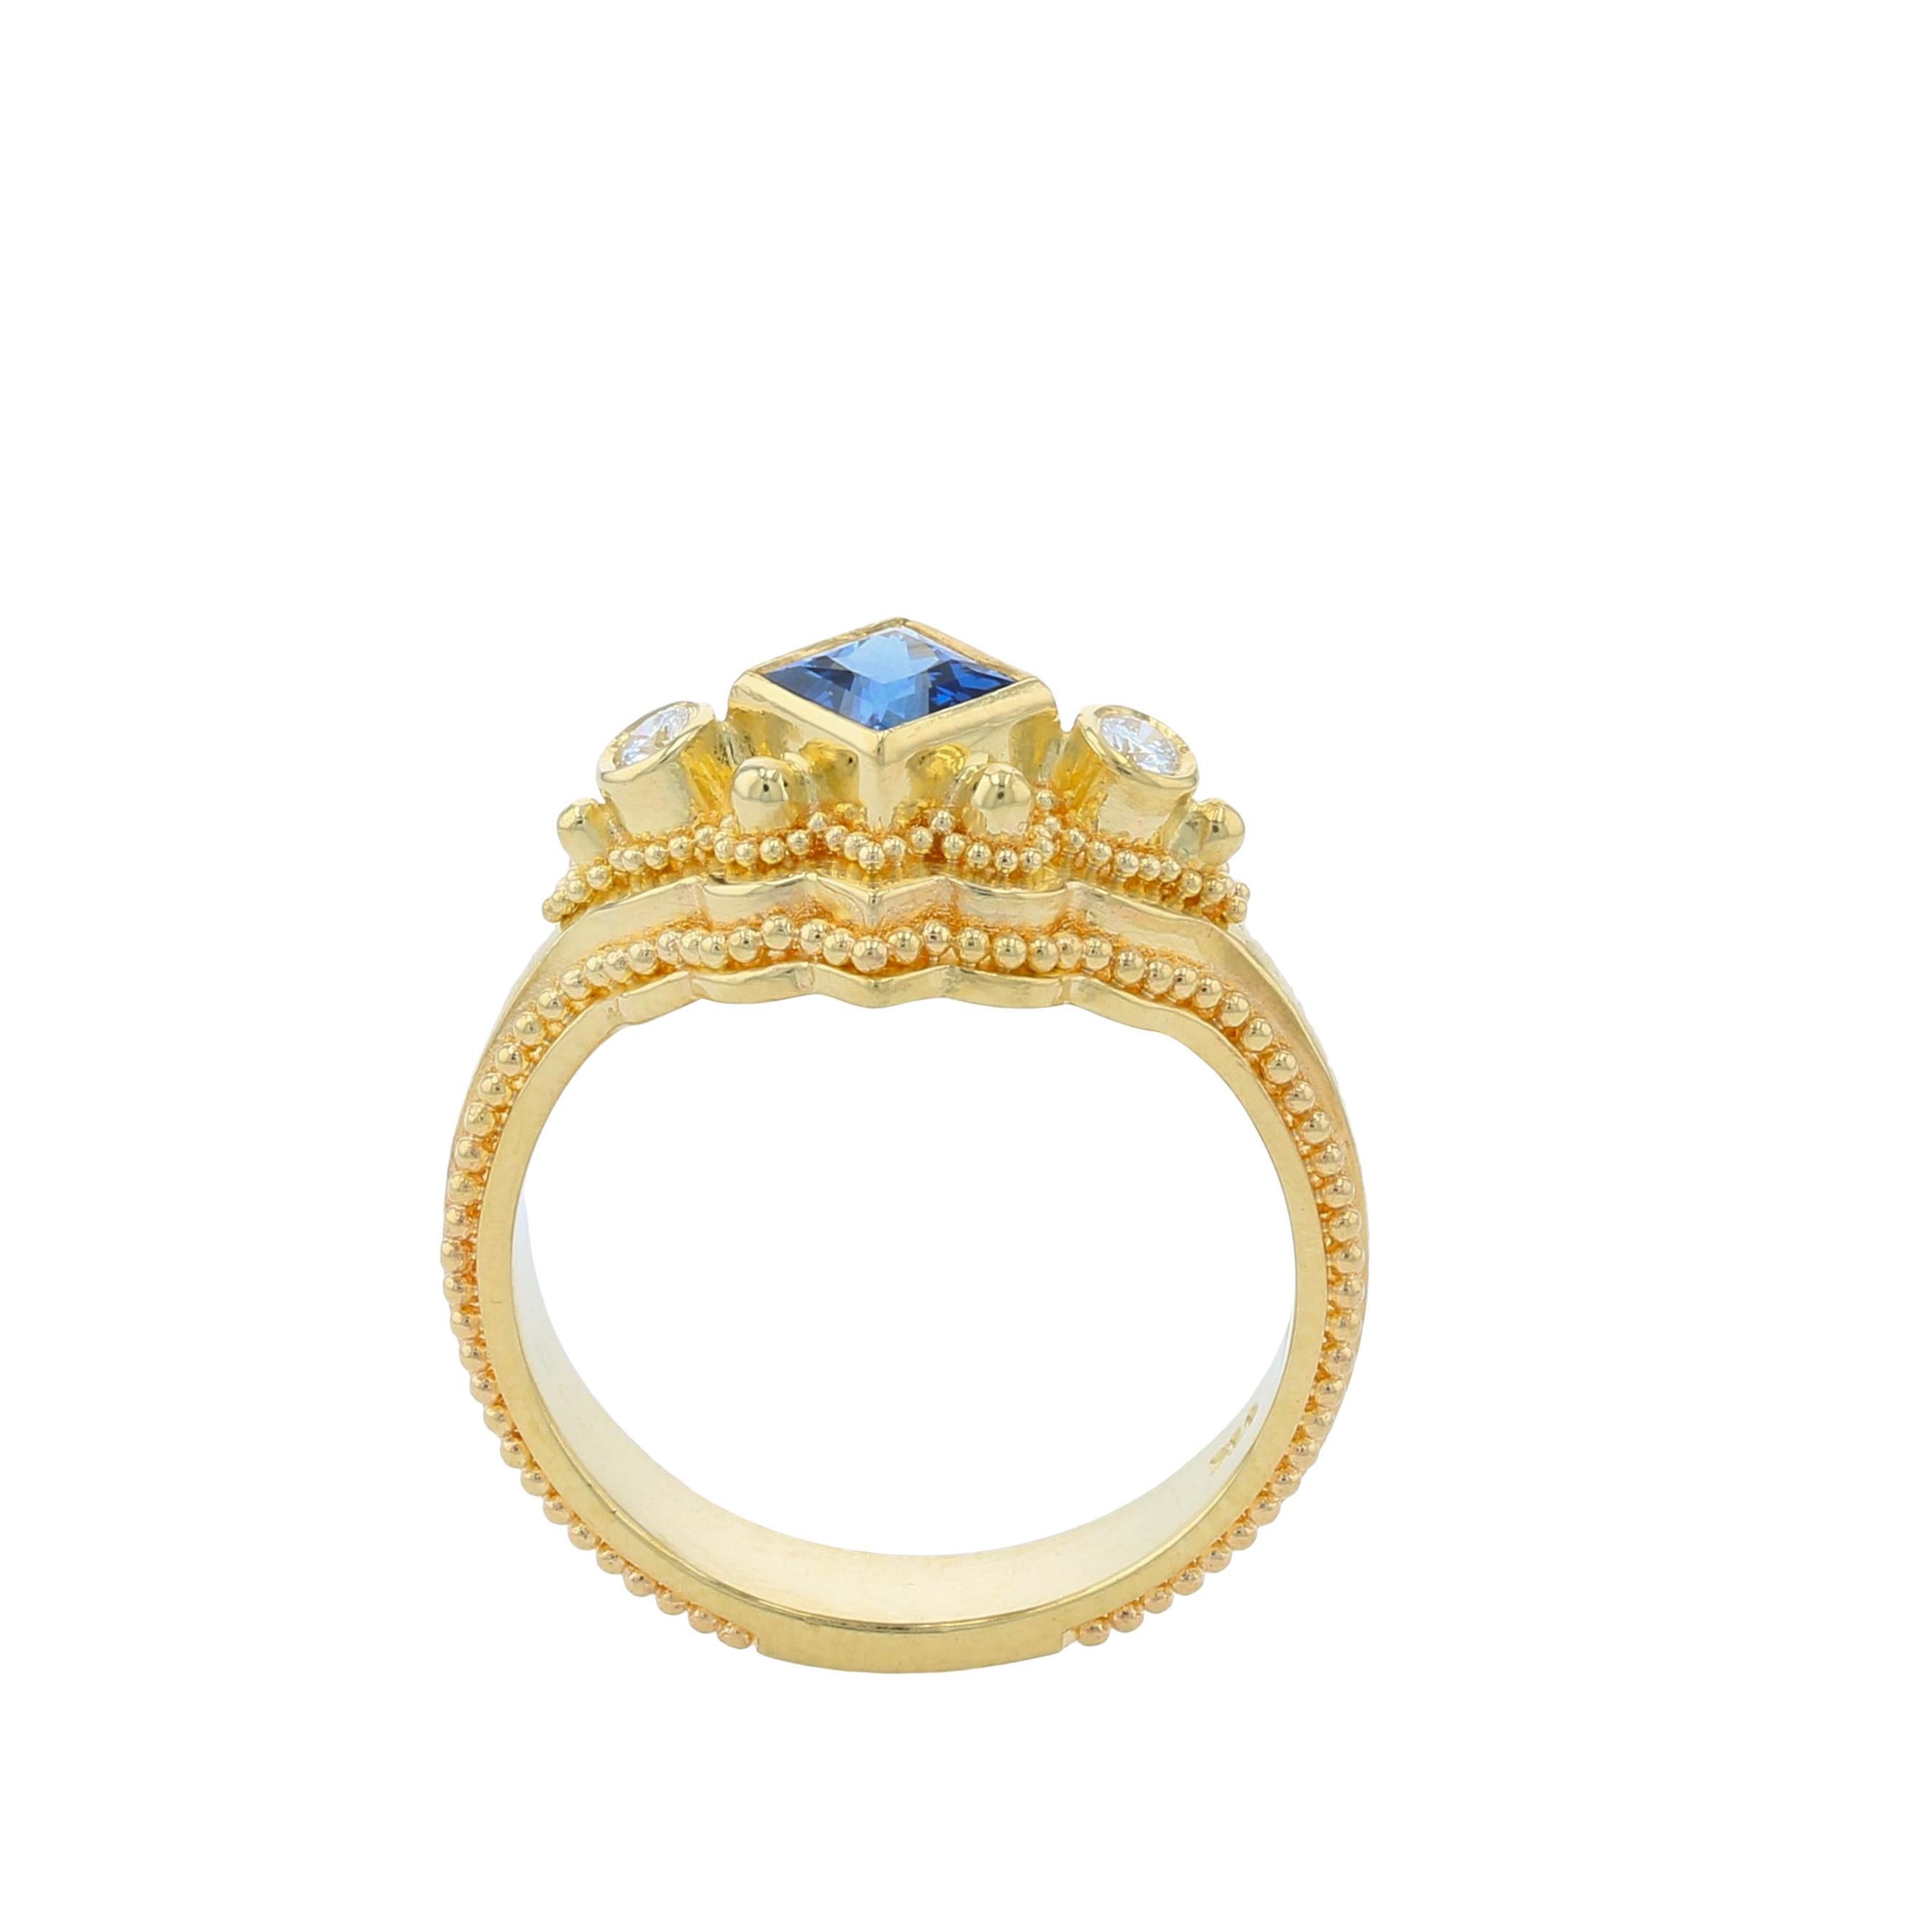 Princess Cut Kent Raible 18 Karat Gold Blue Sapphire and Diamond Cocktail Ring, Granulation